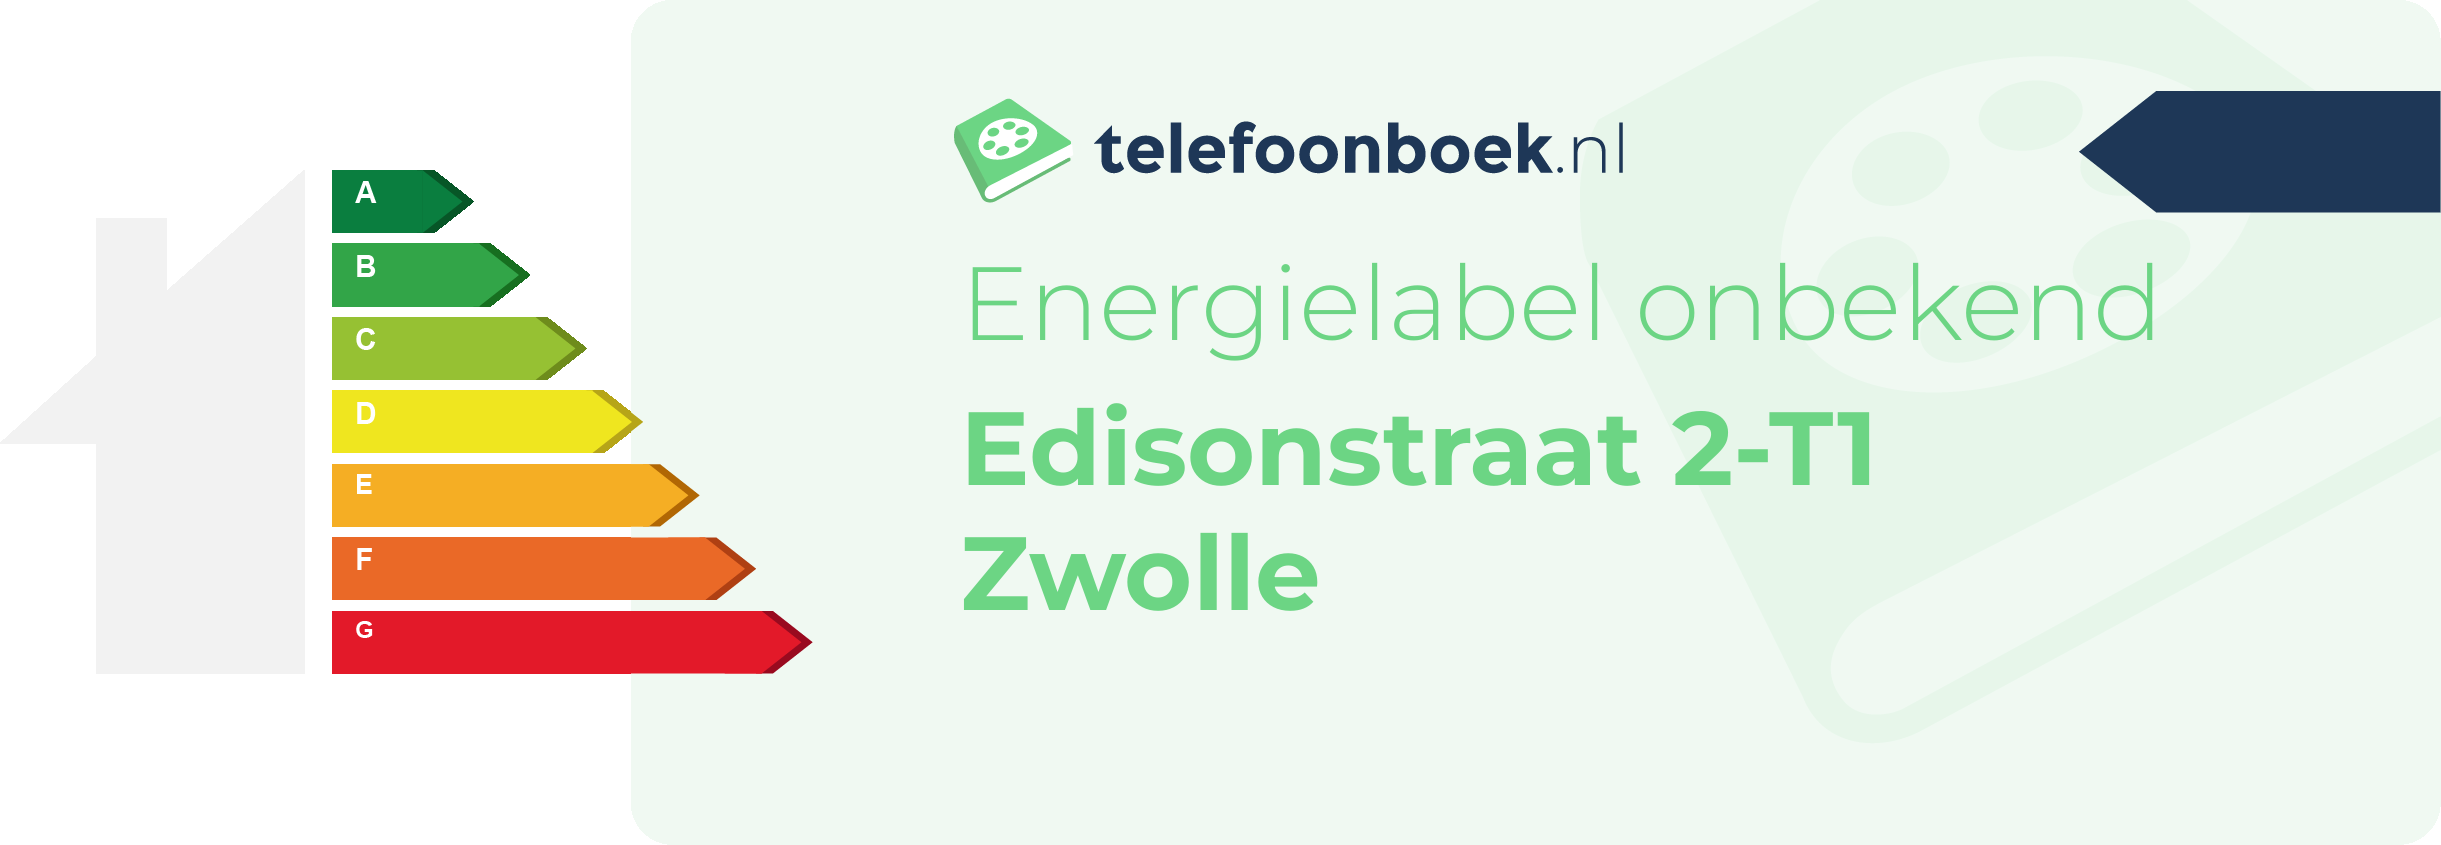 Energielabel Edisonstraat 2-T1 Zwolle